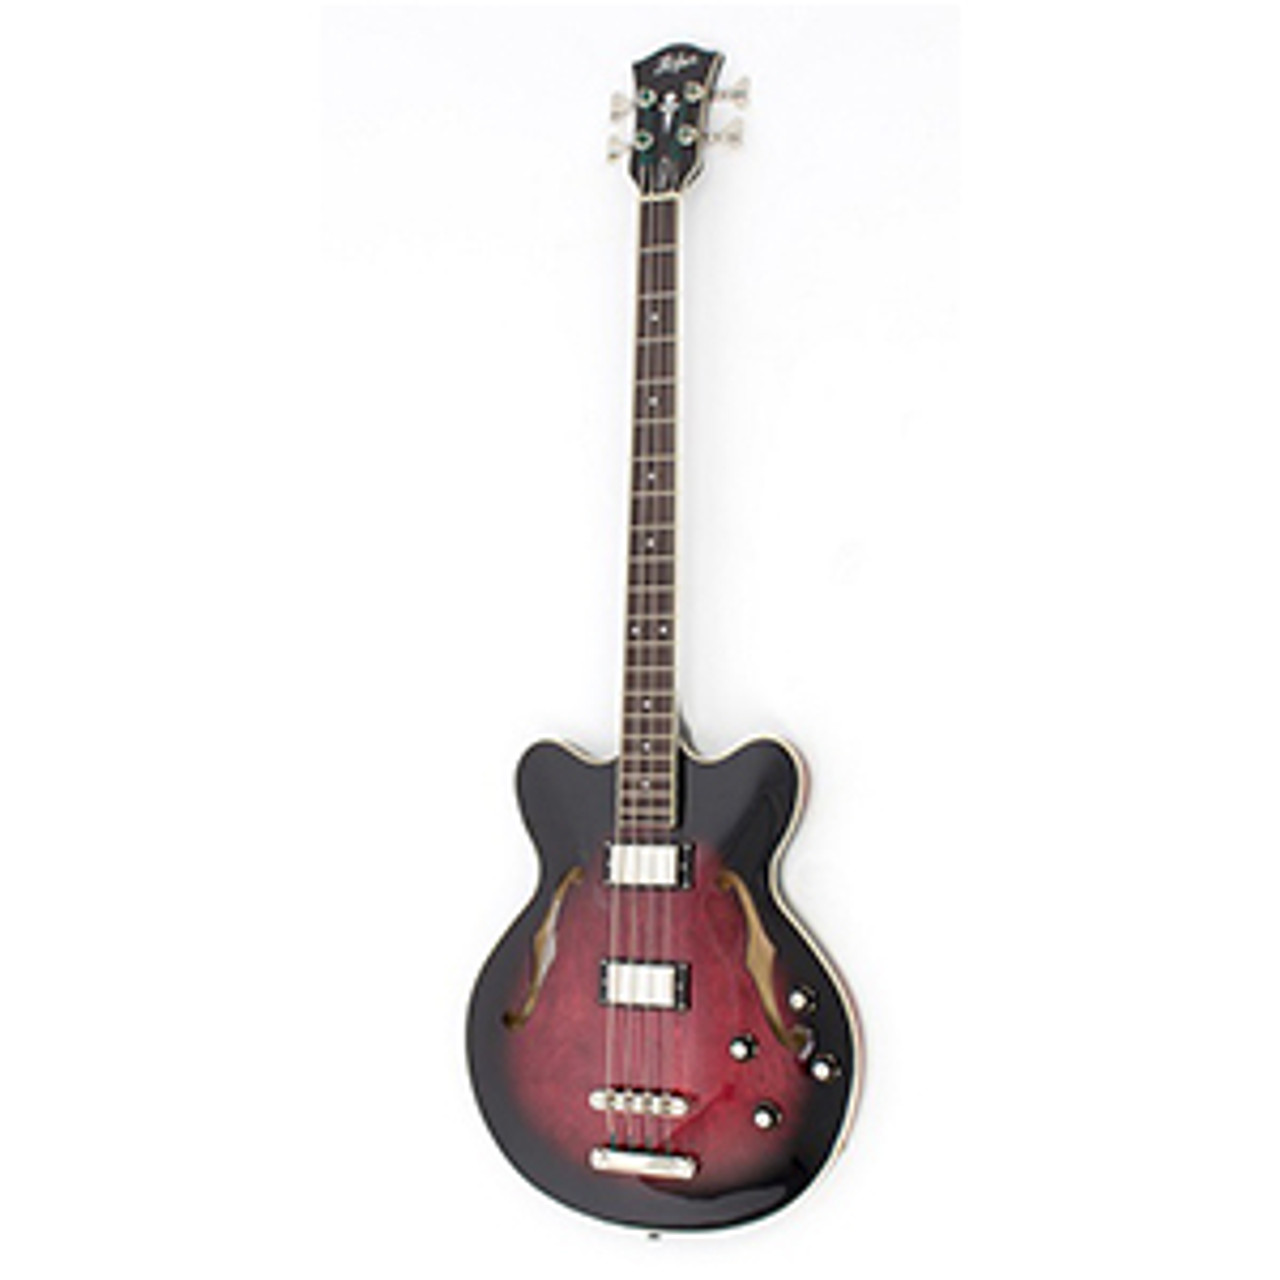 Hofner Verythin Electric Bass, Long Scale, Transparent Dark Cherry Burst, 2x Humbucker Pickups, With Case